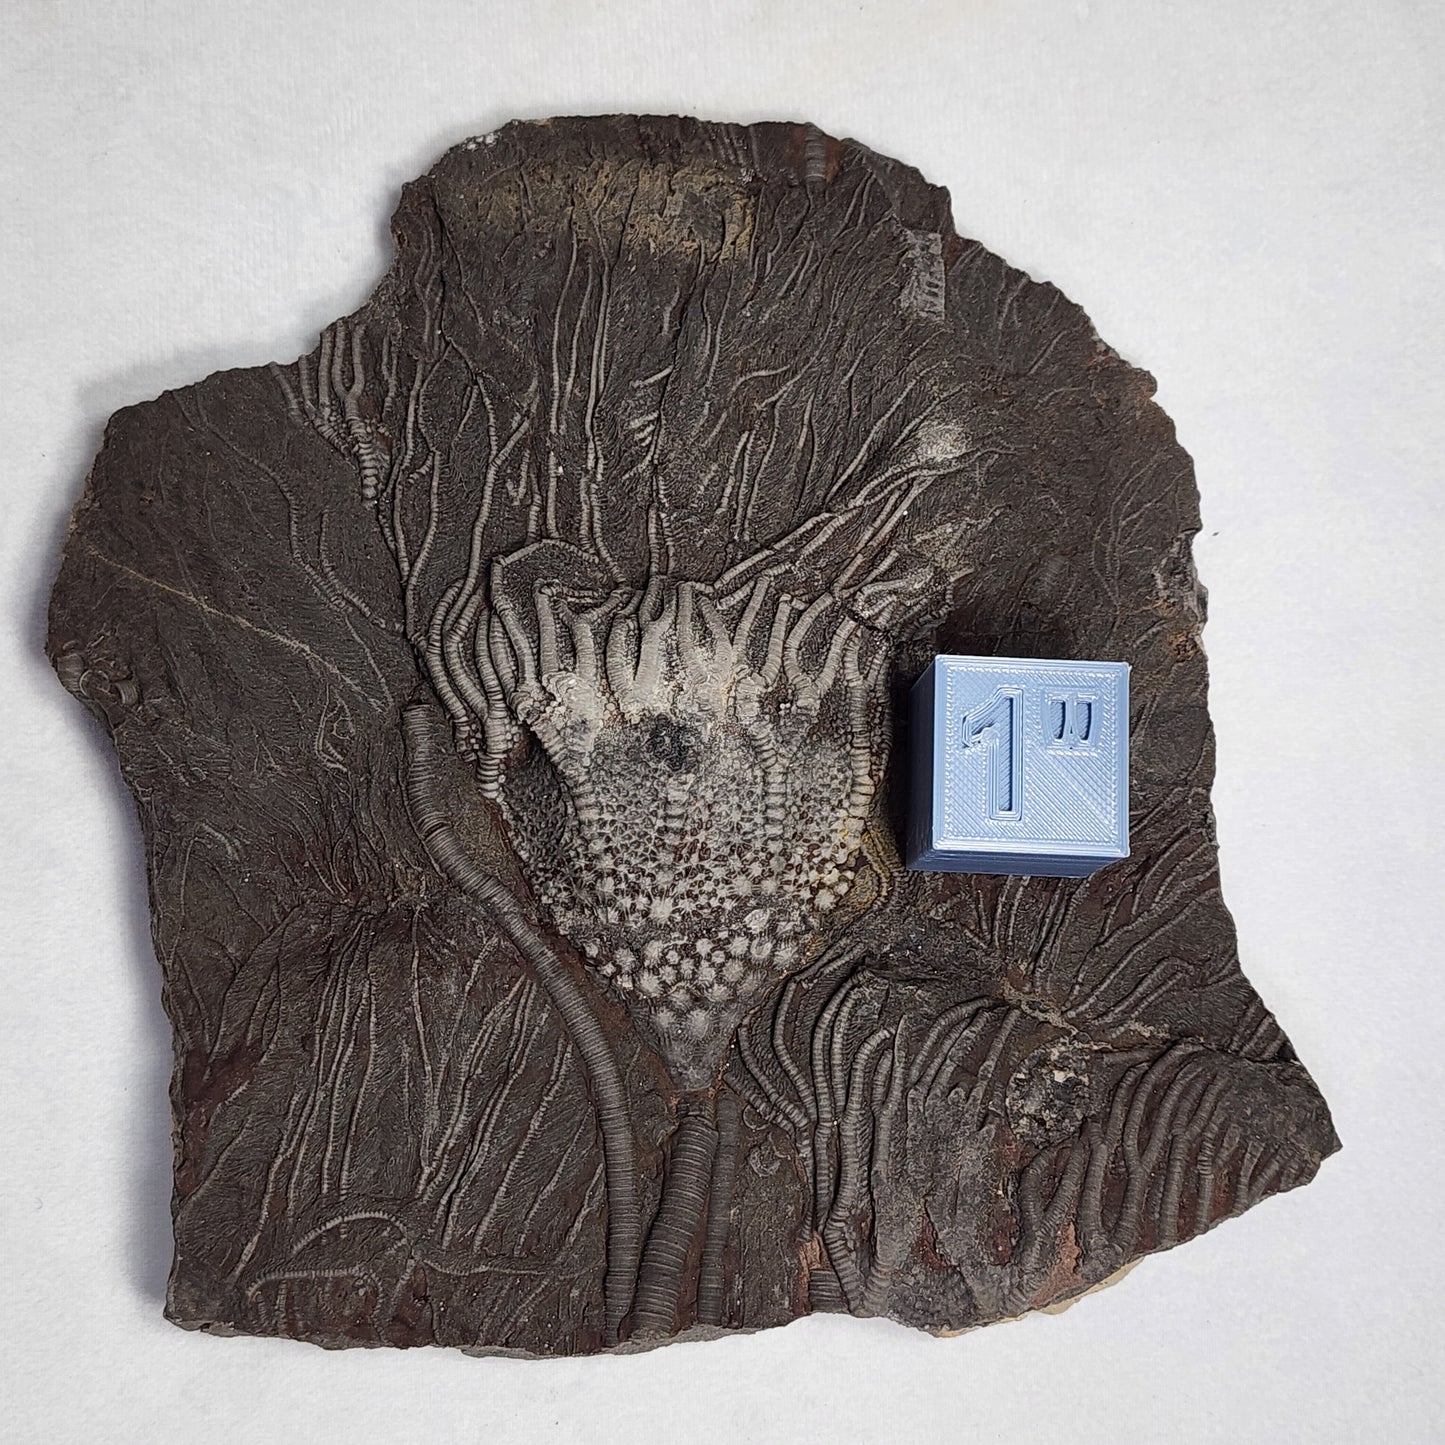 Stunning "Sea Lilly" Crinoid Plate